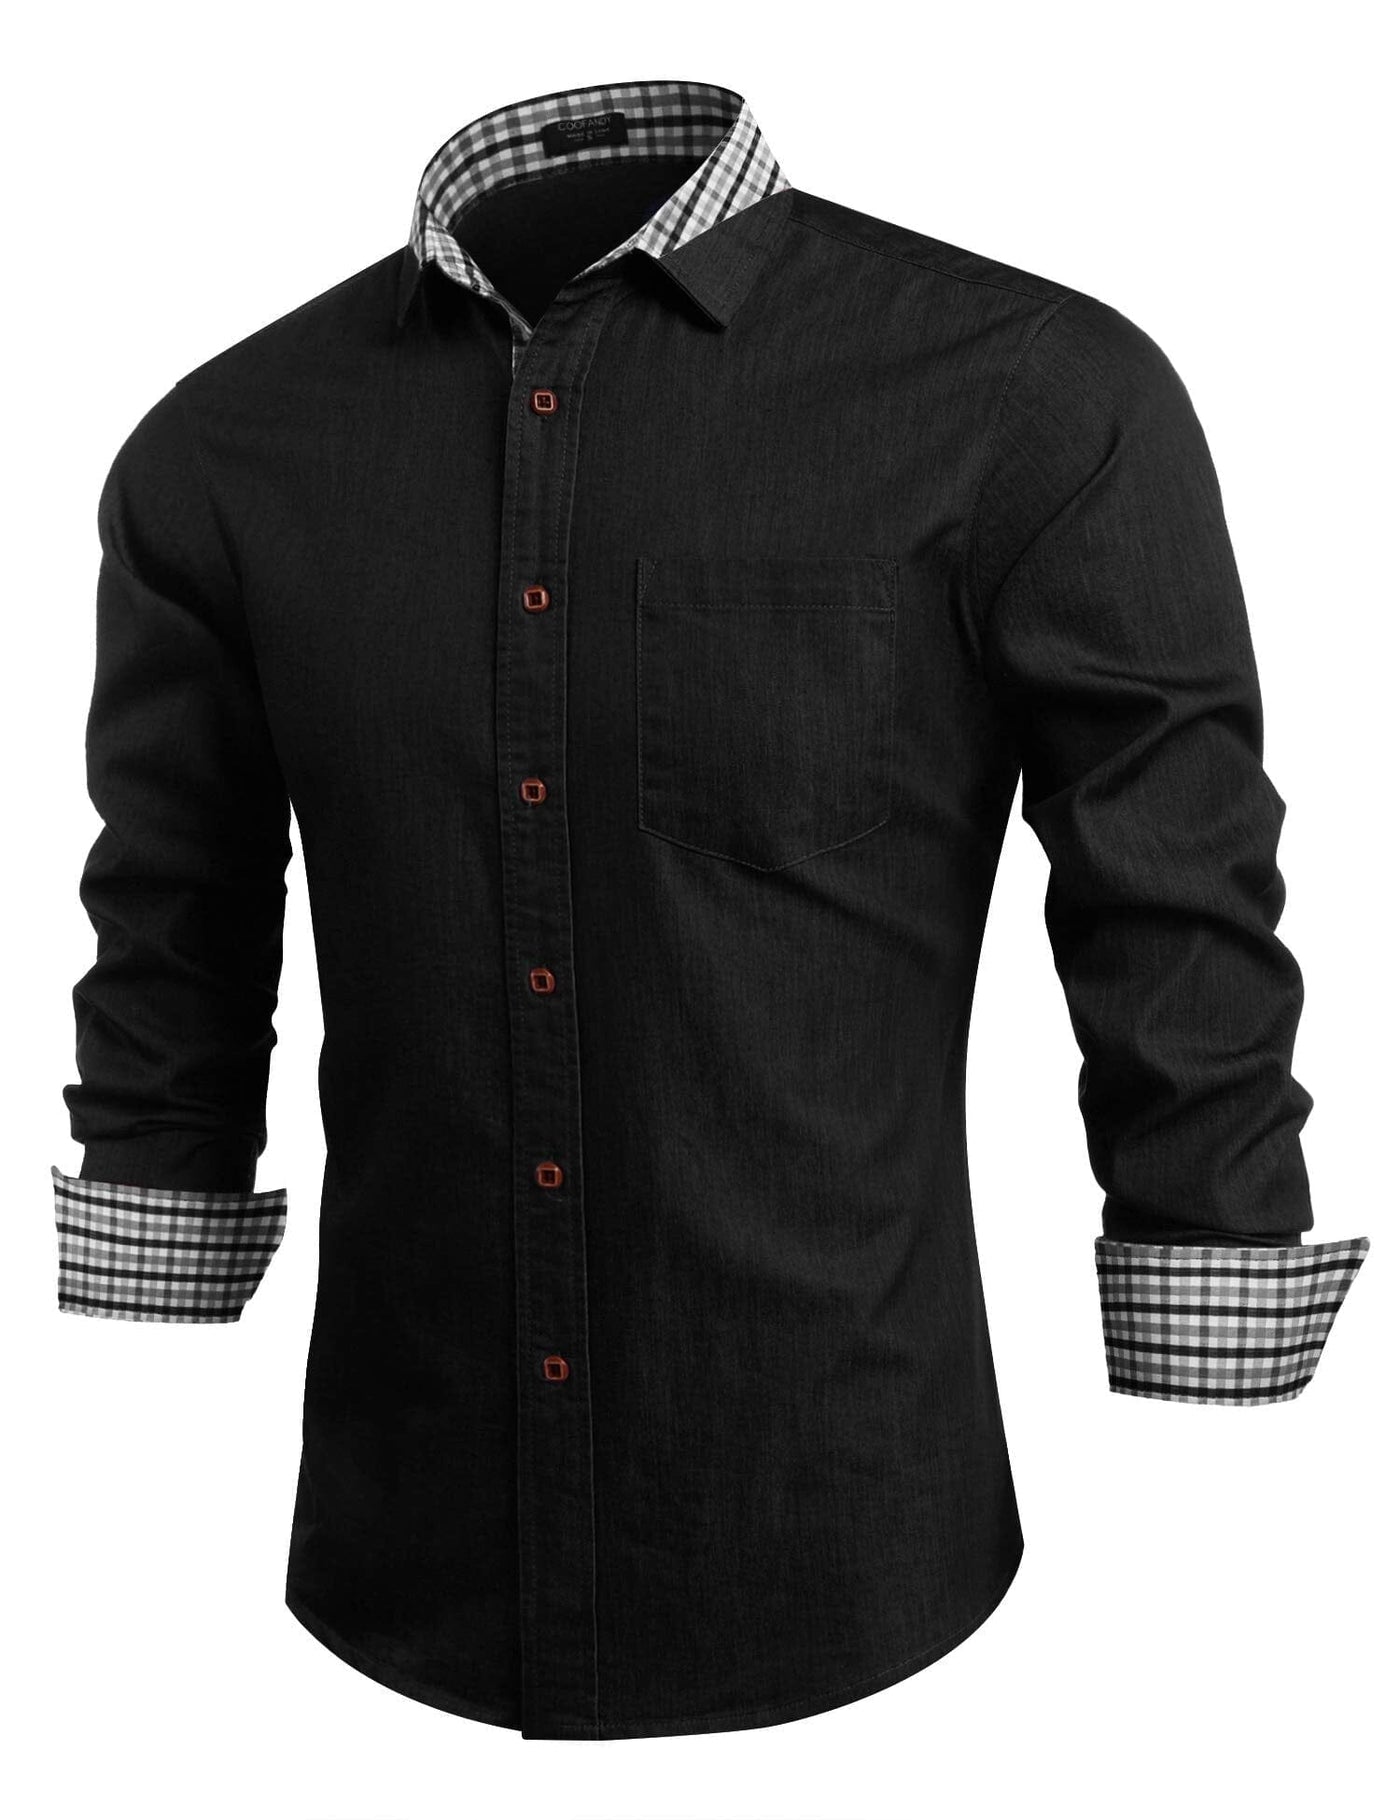 Coofandy Denim Work Shirt (US Only) Shirts coofandy Type 02 Black S 